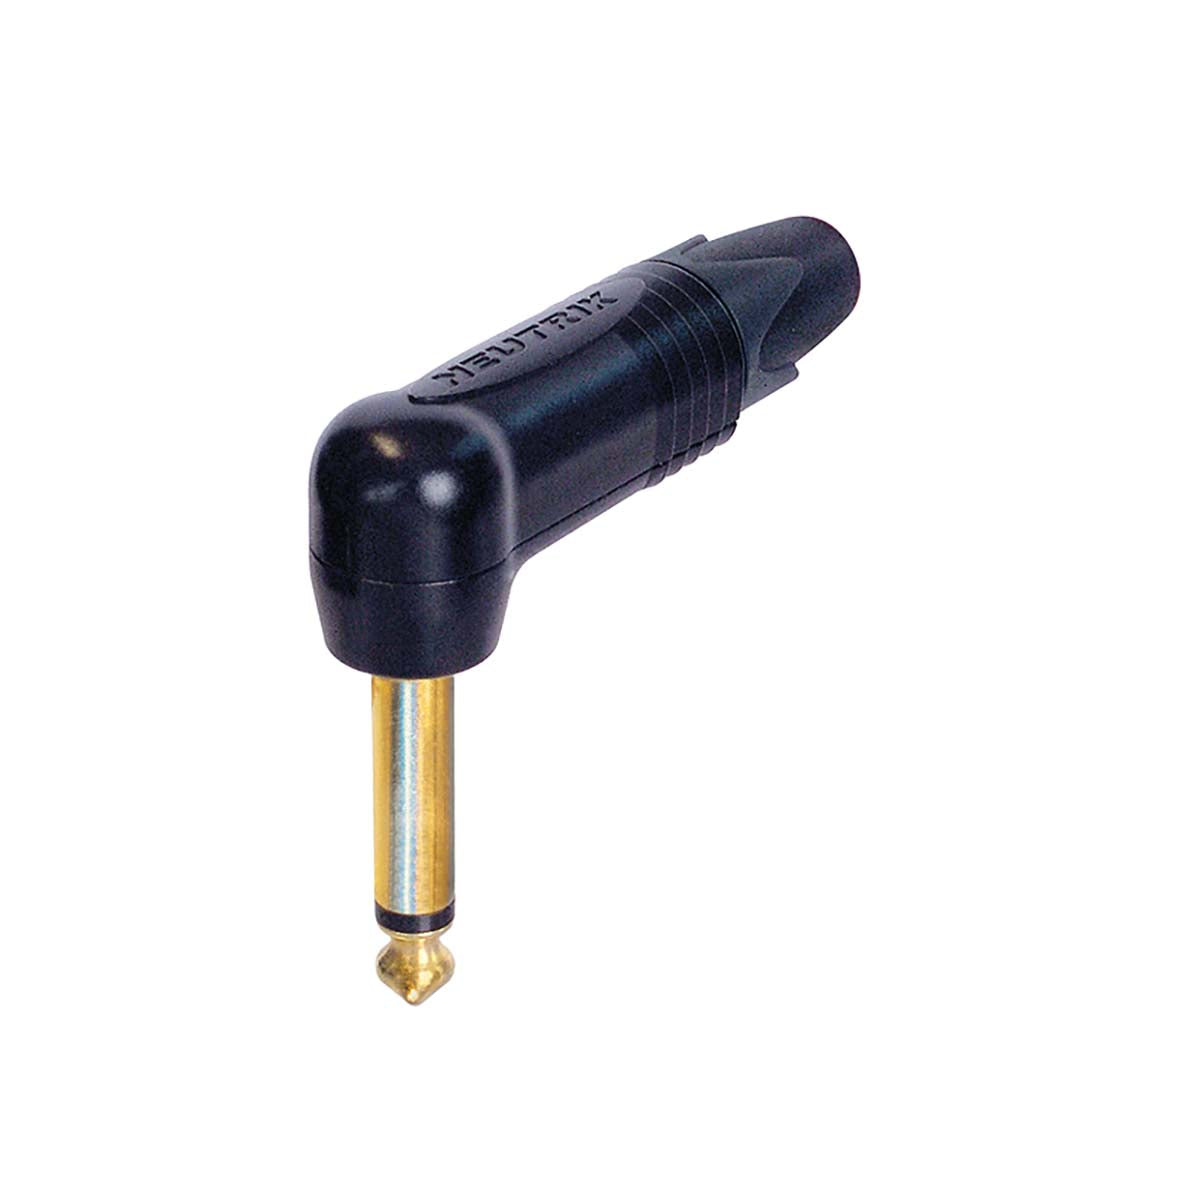 2-poliger 6,35-mm-Profi-Winkelstecker, goldene Kontakte, schwarzes Gehäuse